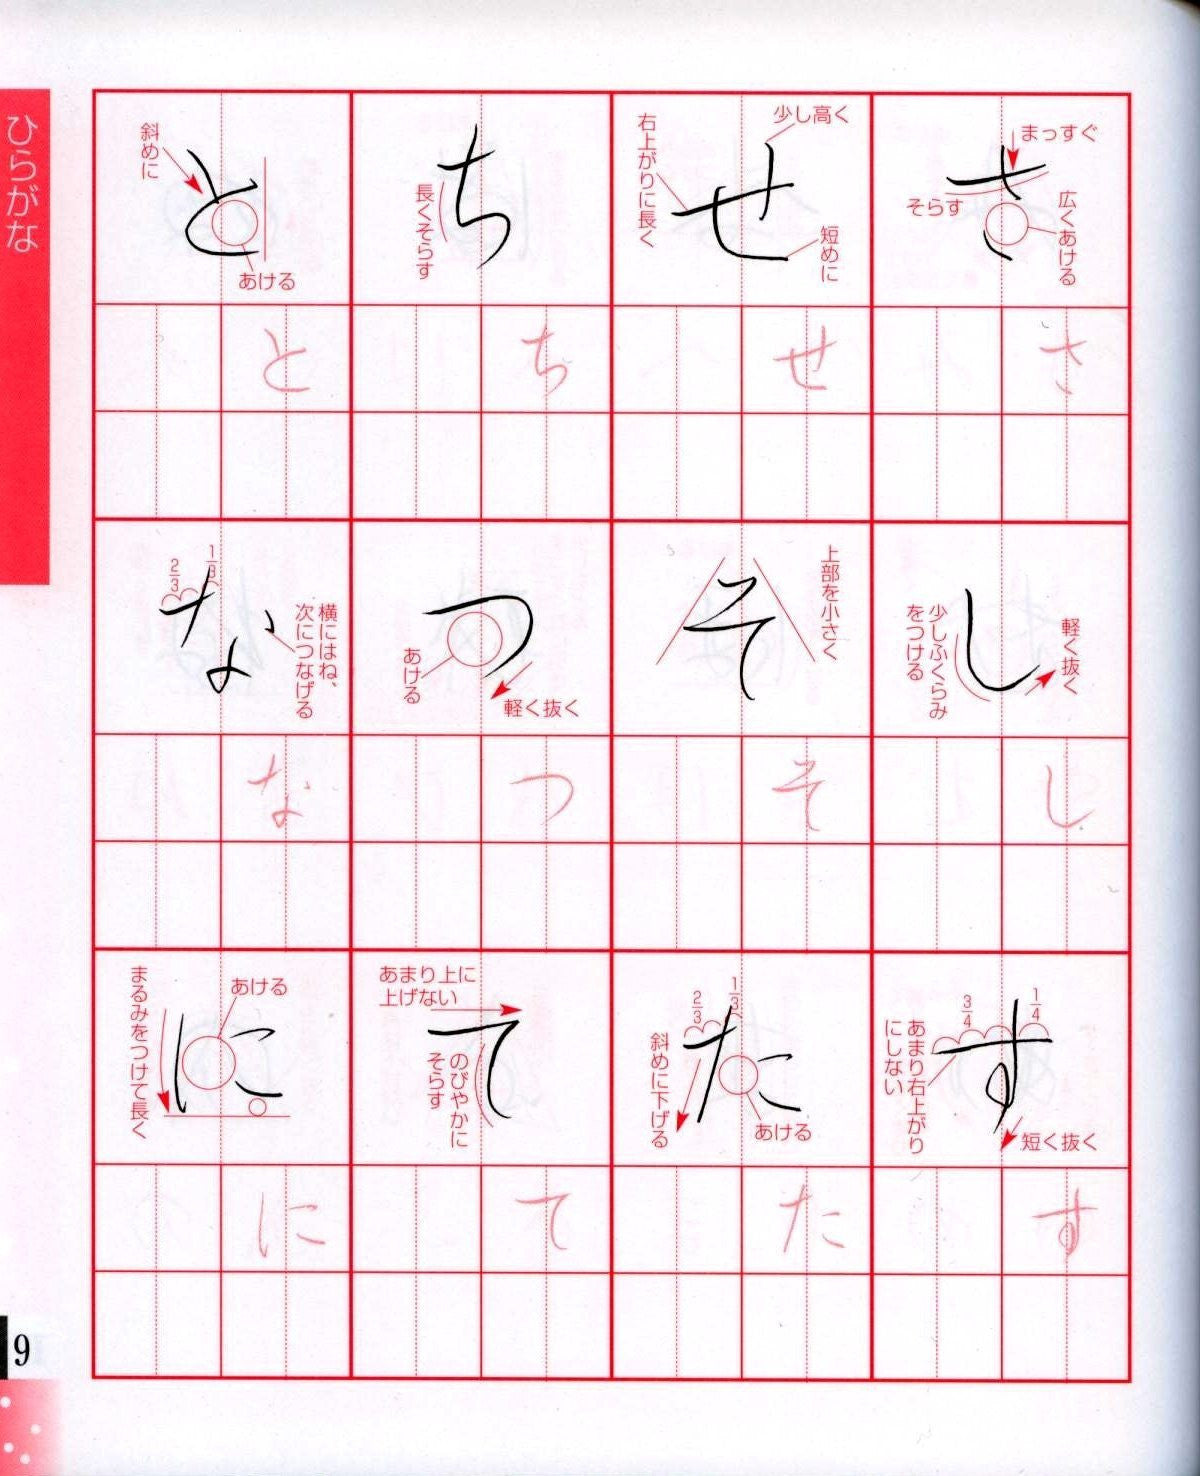 Japanese Writing Practice Book